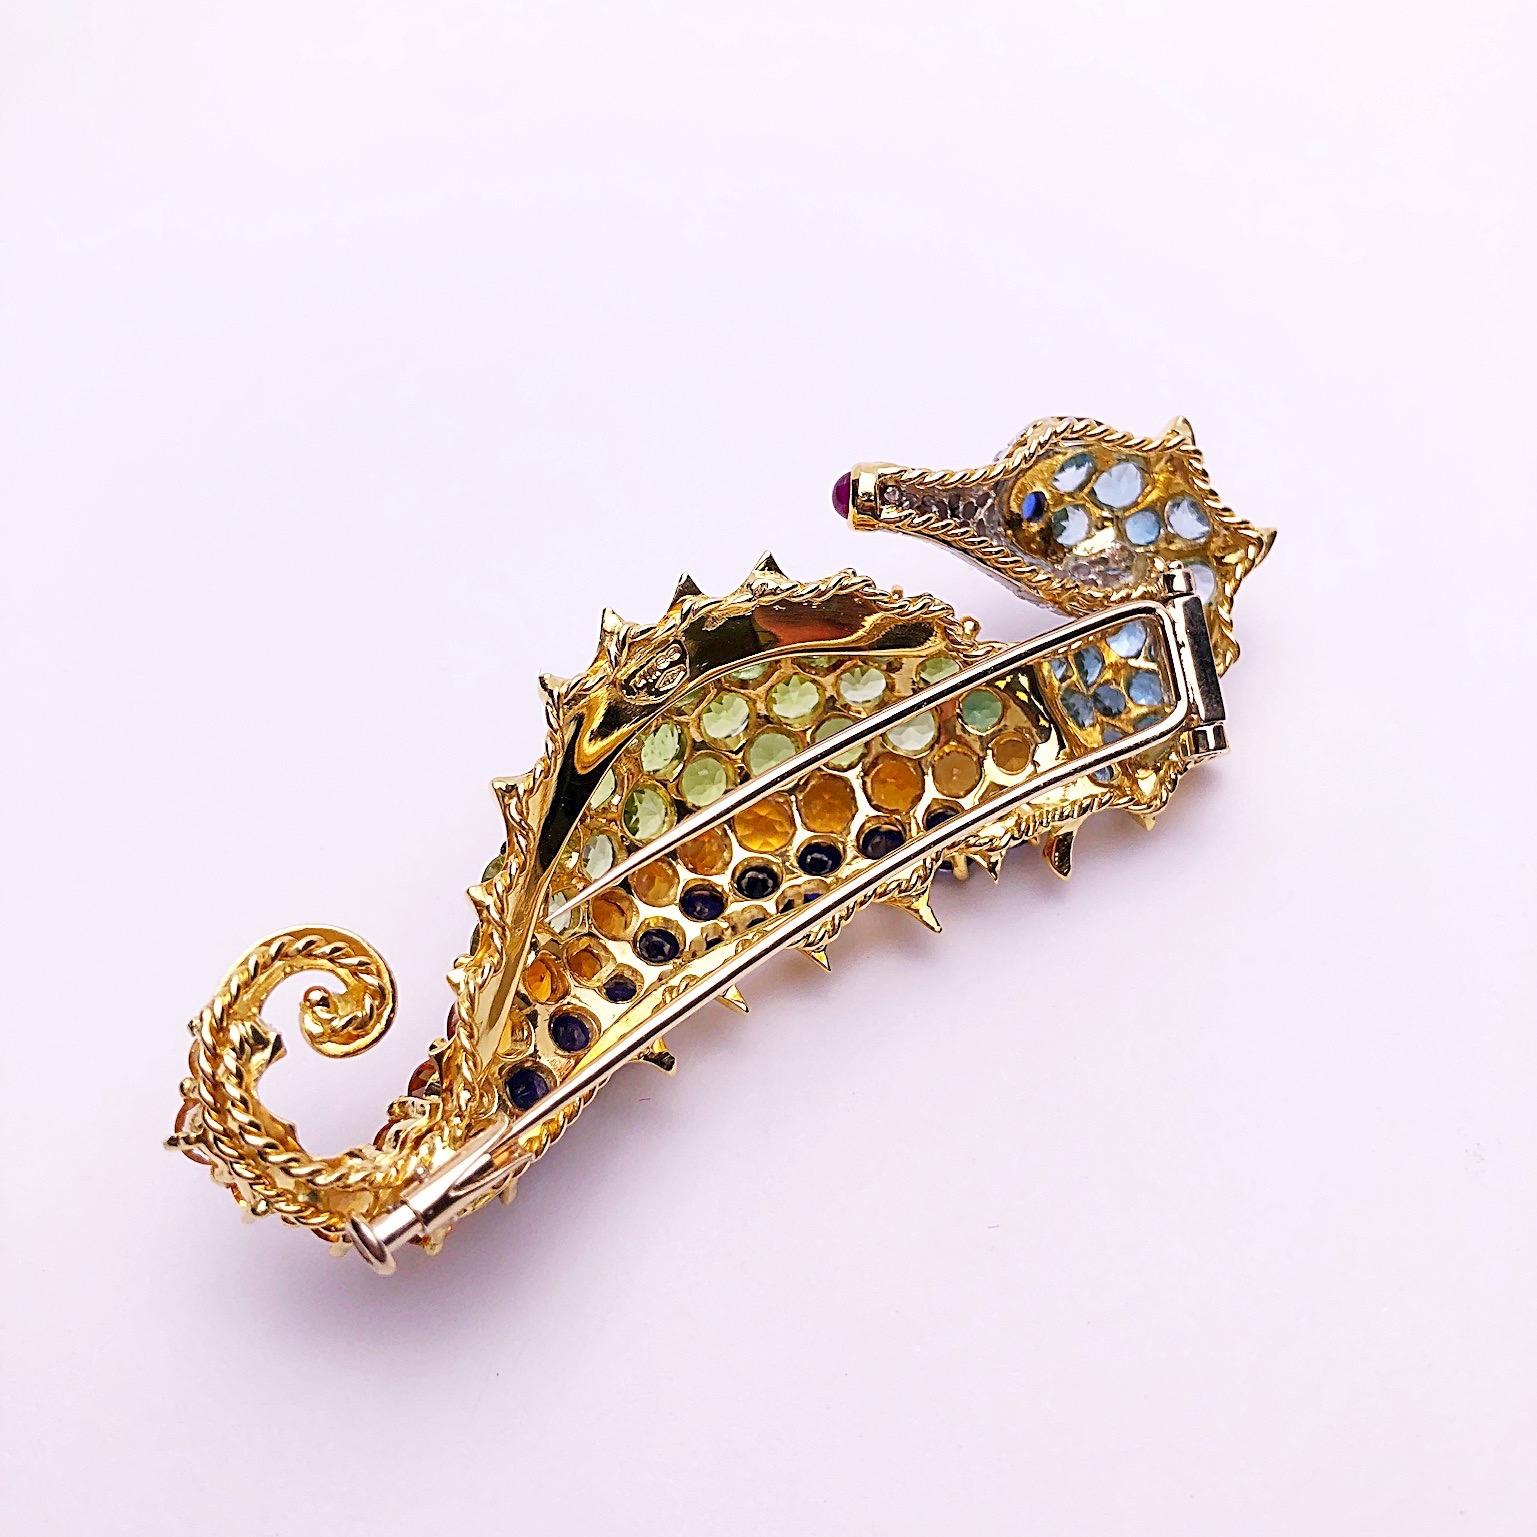 Contemporary Cellini 18 Karat Gold Seahorse Brooch with Diamonds and Semi-Precious Stones